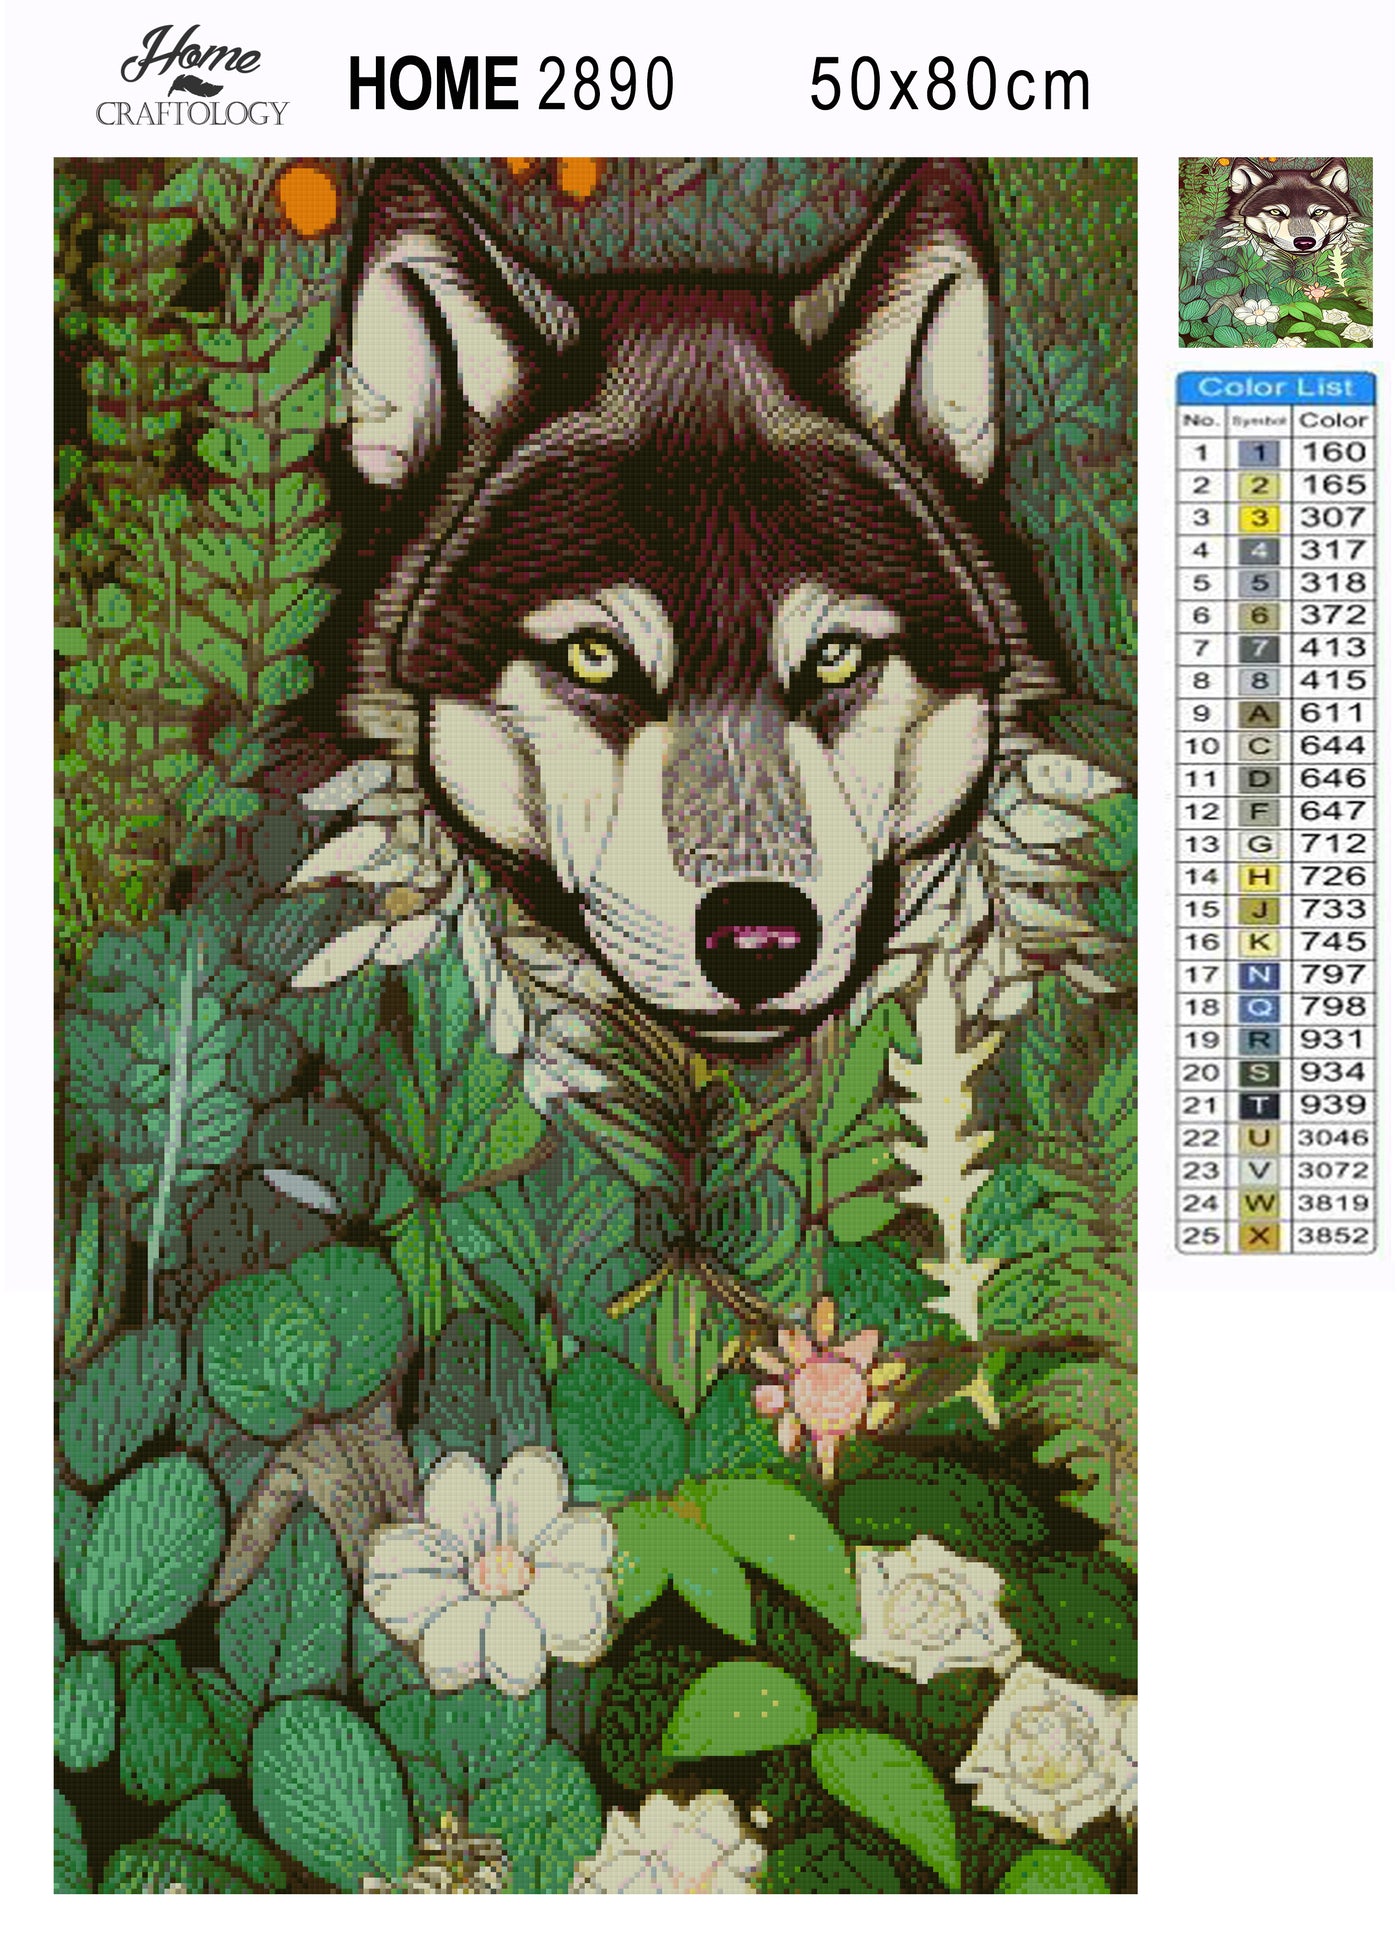 Wolf and Flowers - Premium Diamond Painting Kit